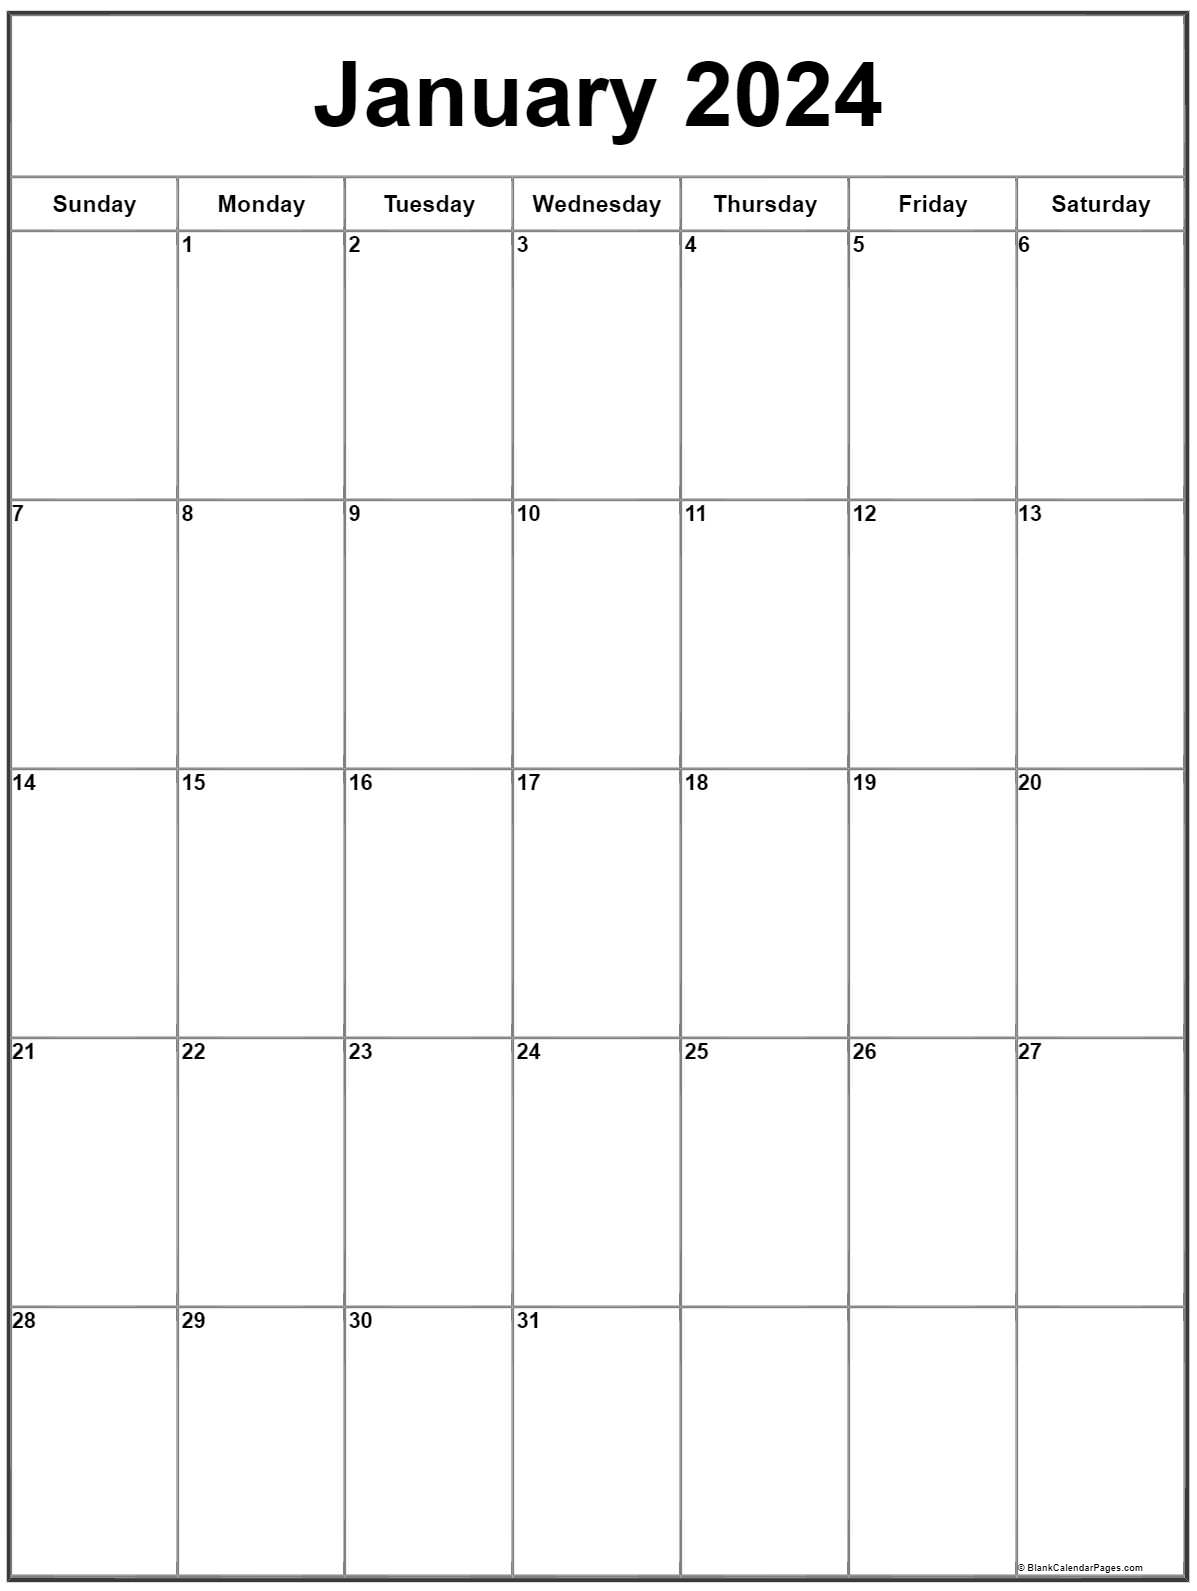 jan-2024-calendar-advancefiber-in